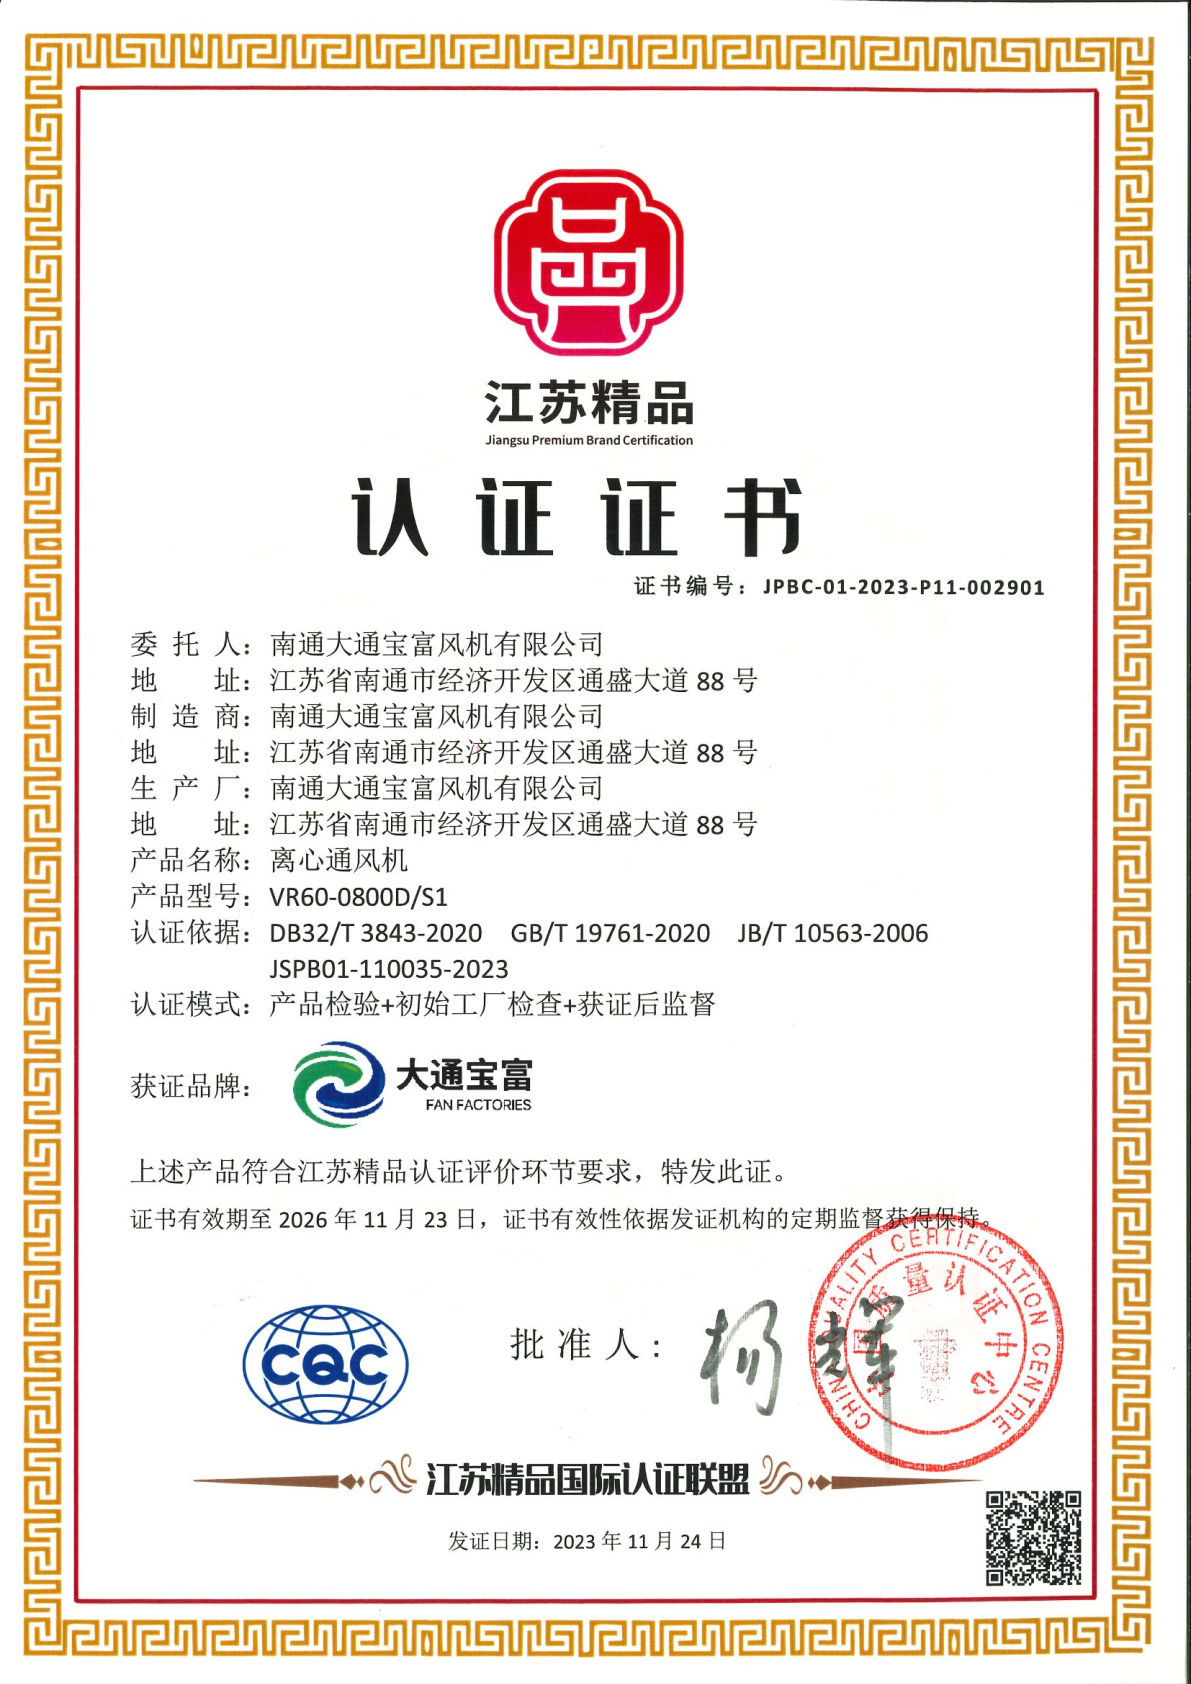 Jiangsu Premium Brand Certification